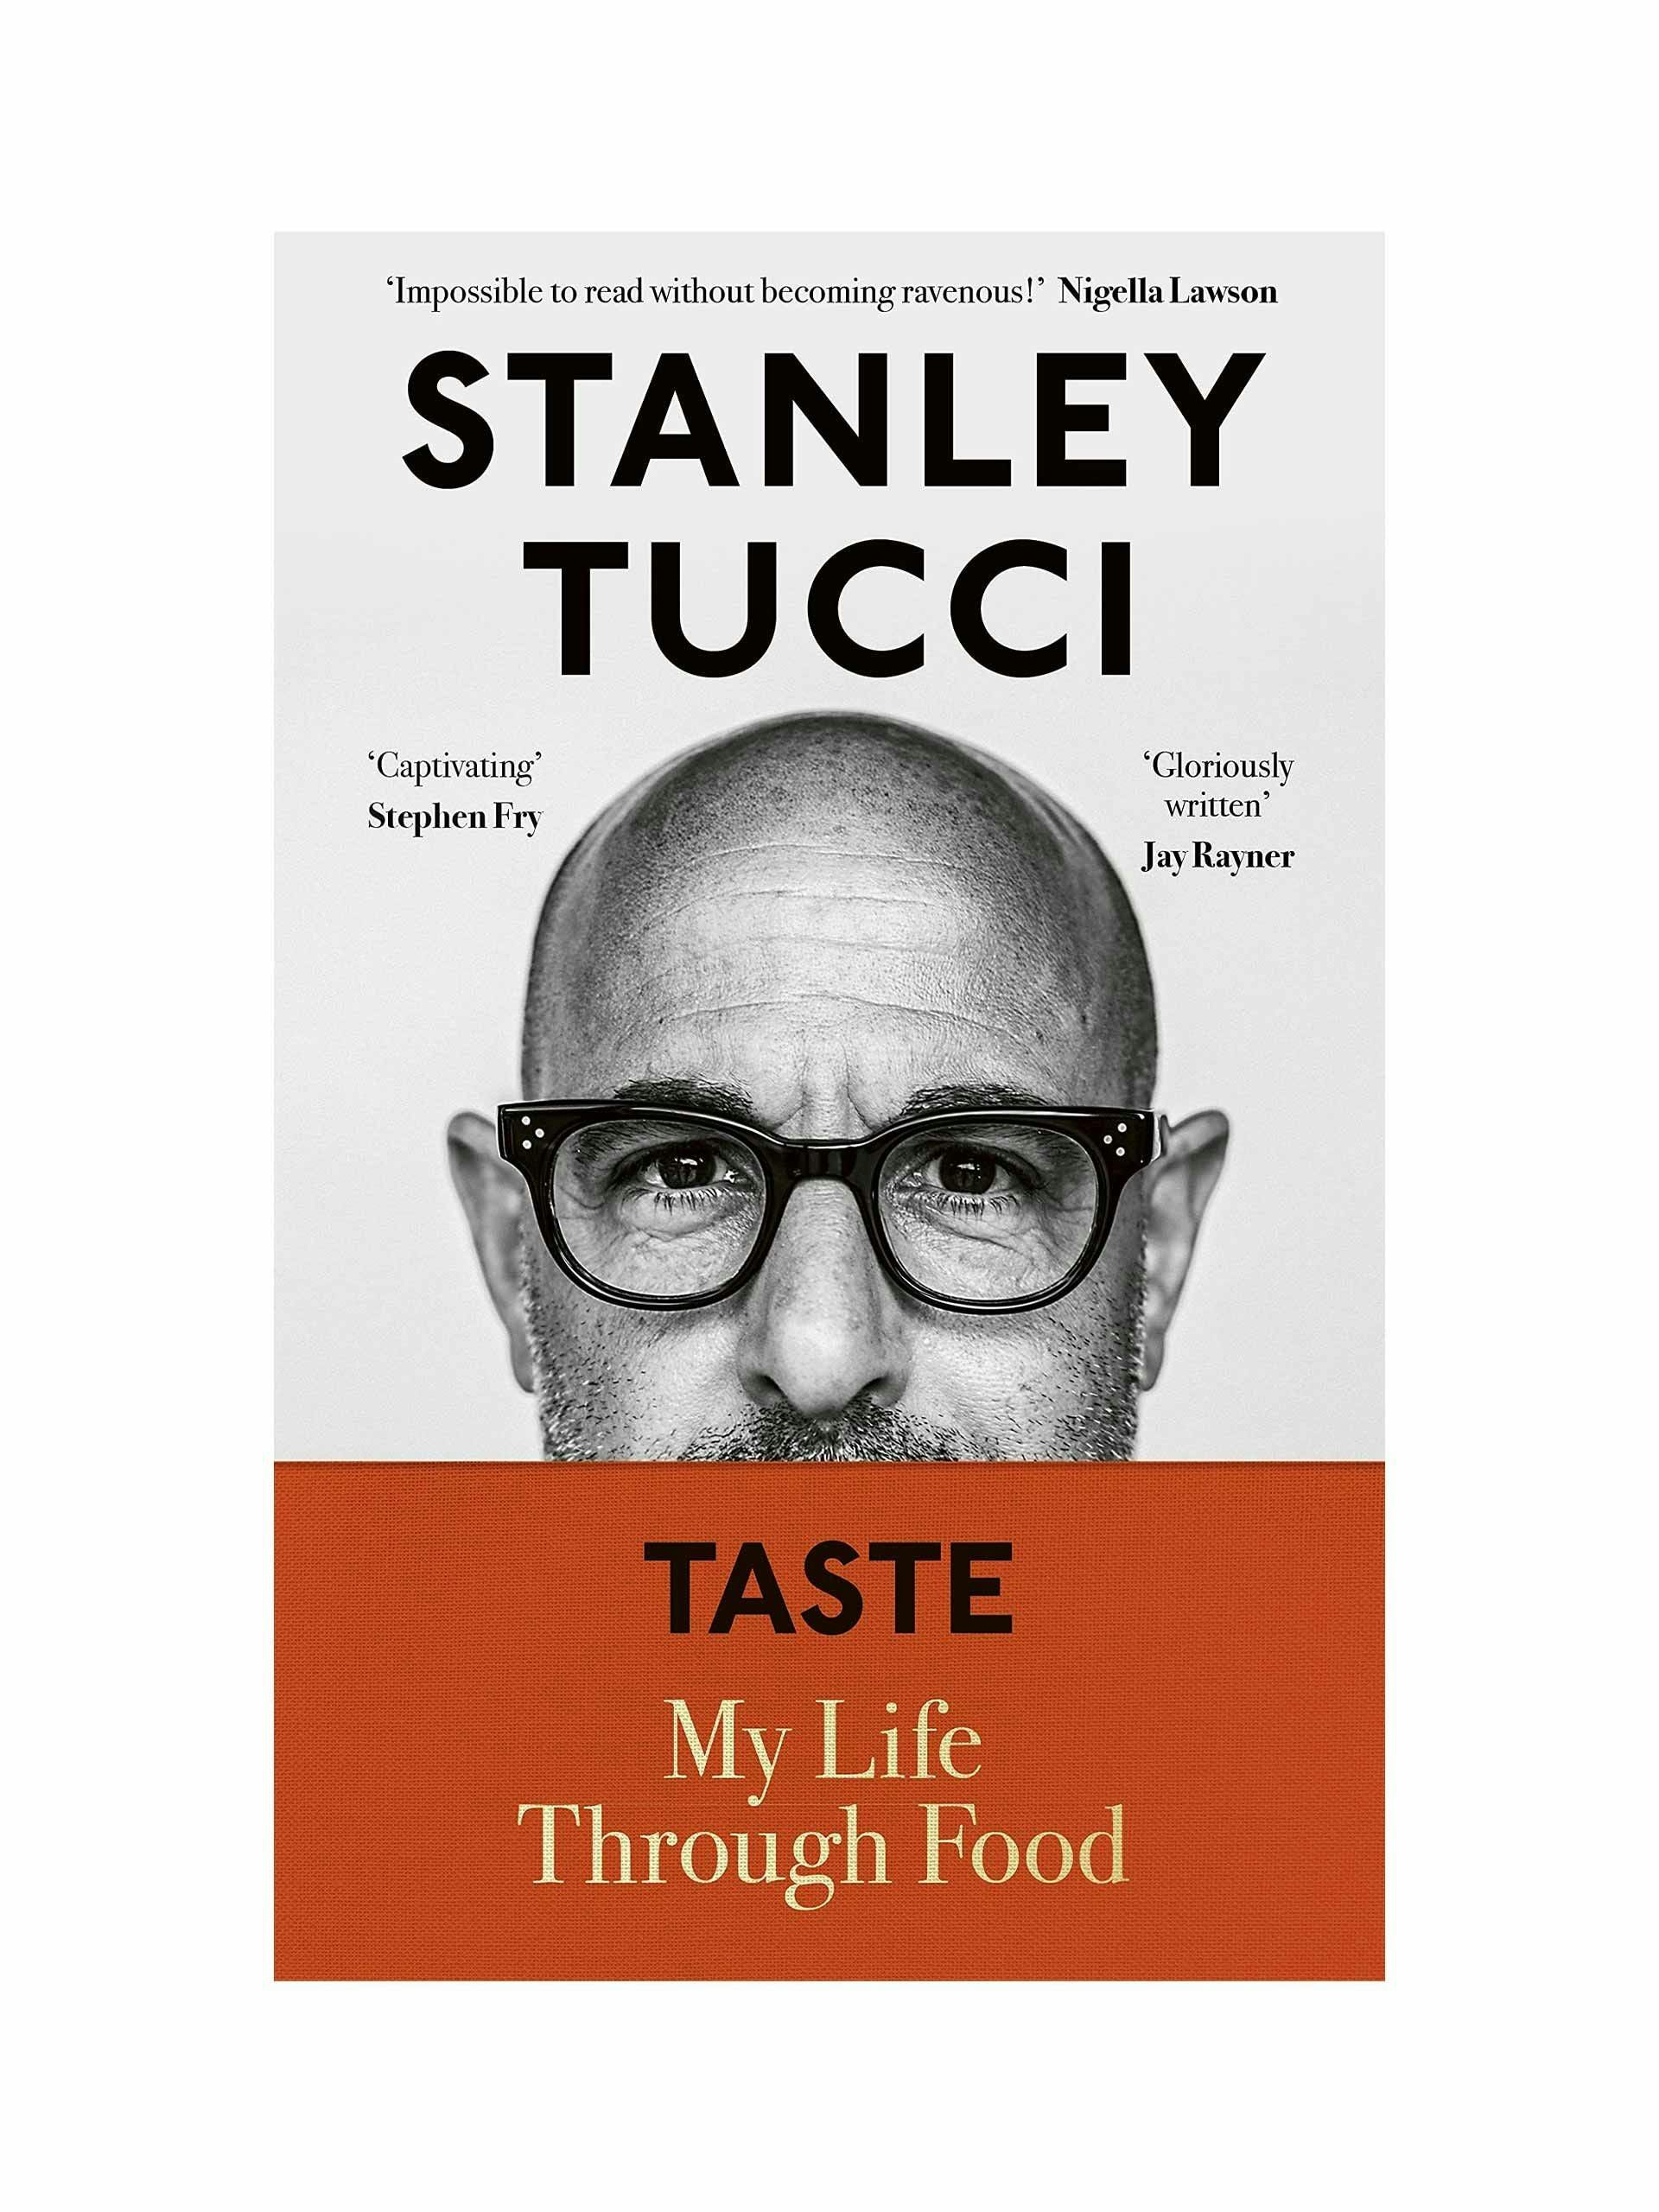 Taste: my life through food by Stanley Tucci